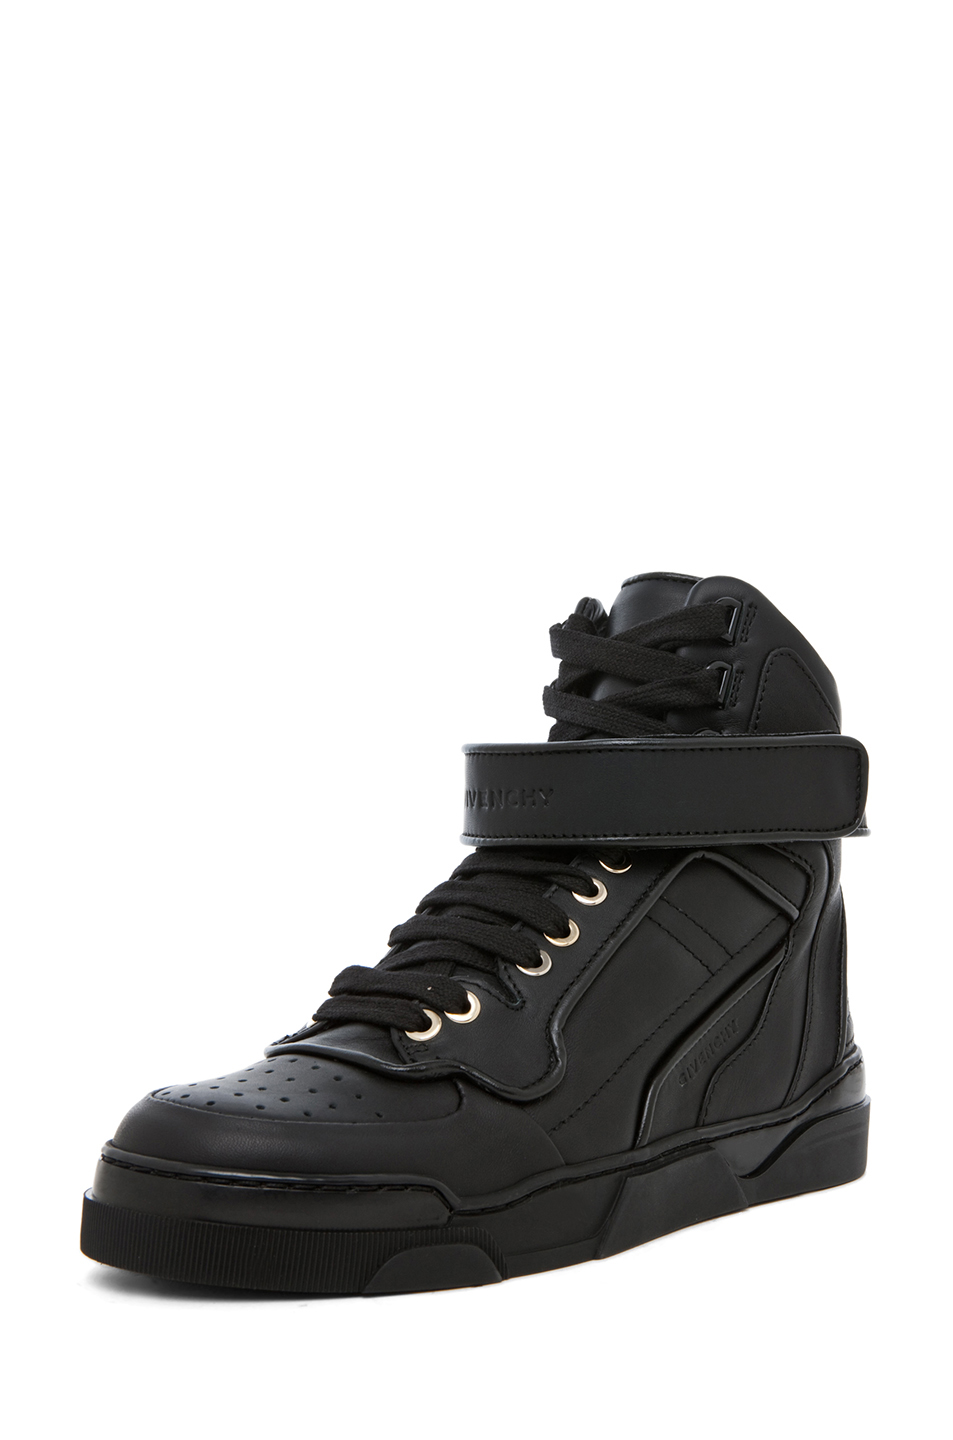 Givenchy Sneaker in Black in Black | Lyst